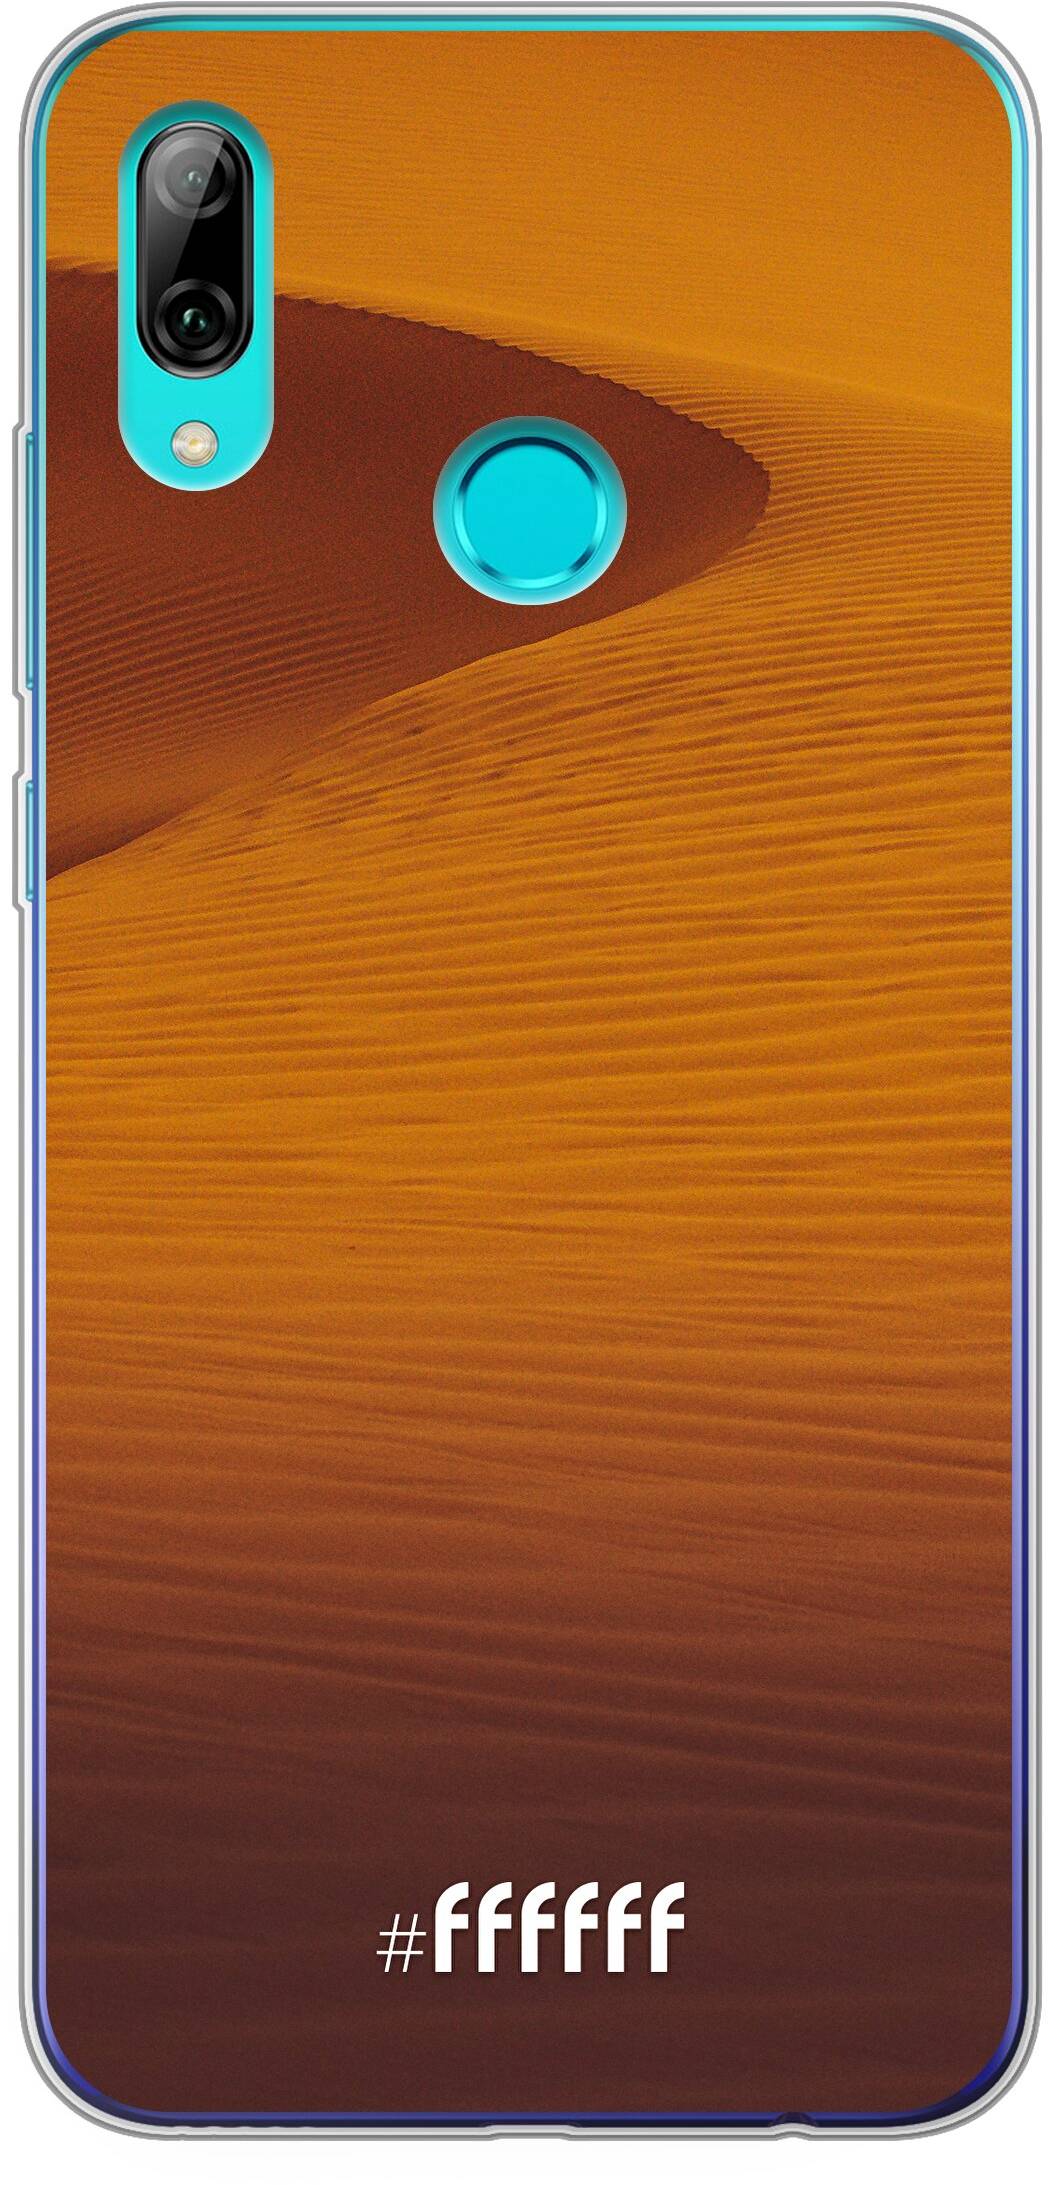 Sand Dunes P Smart (2019)